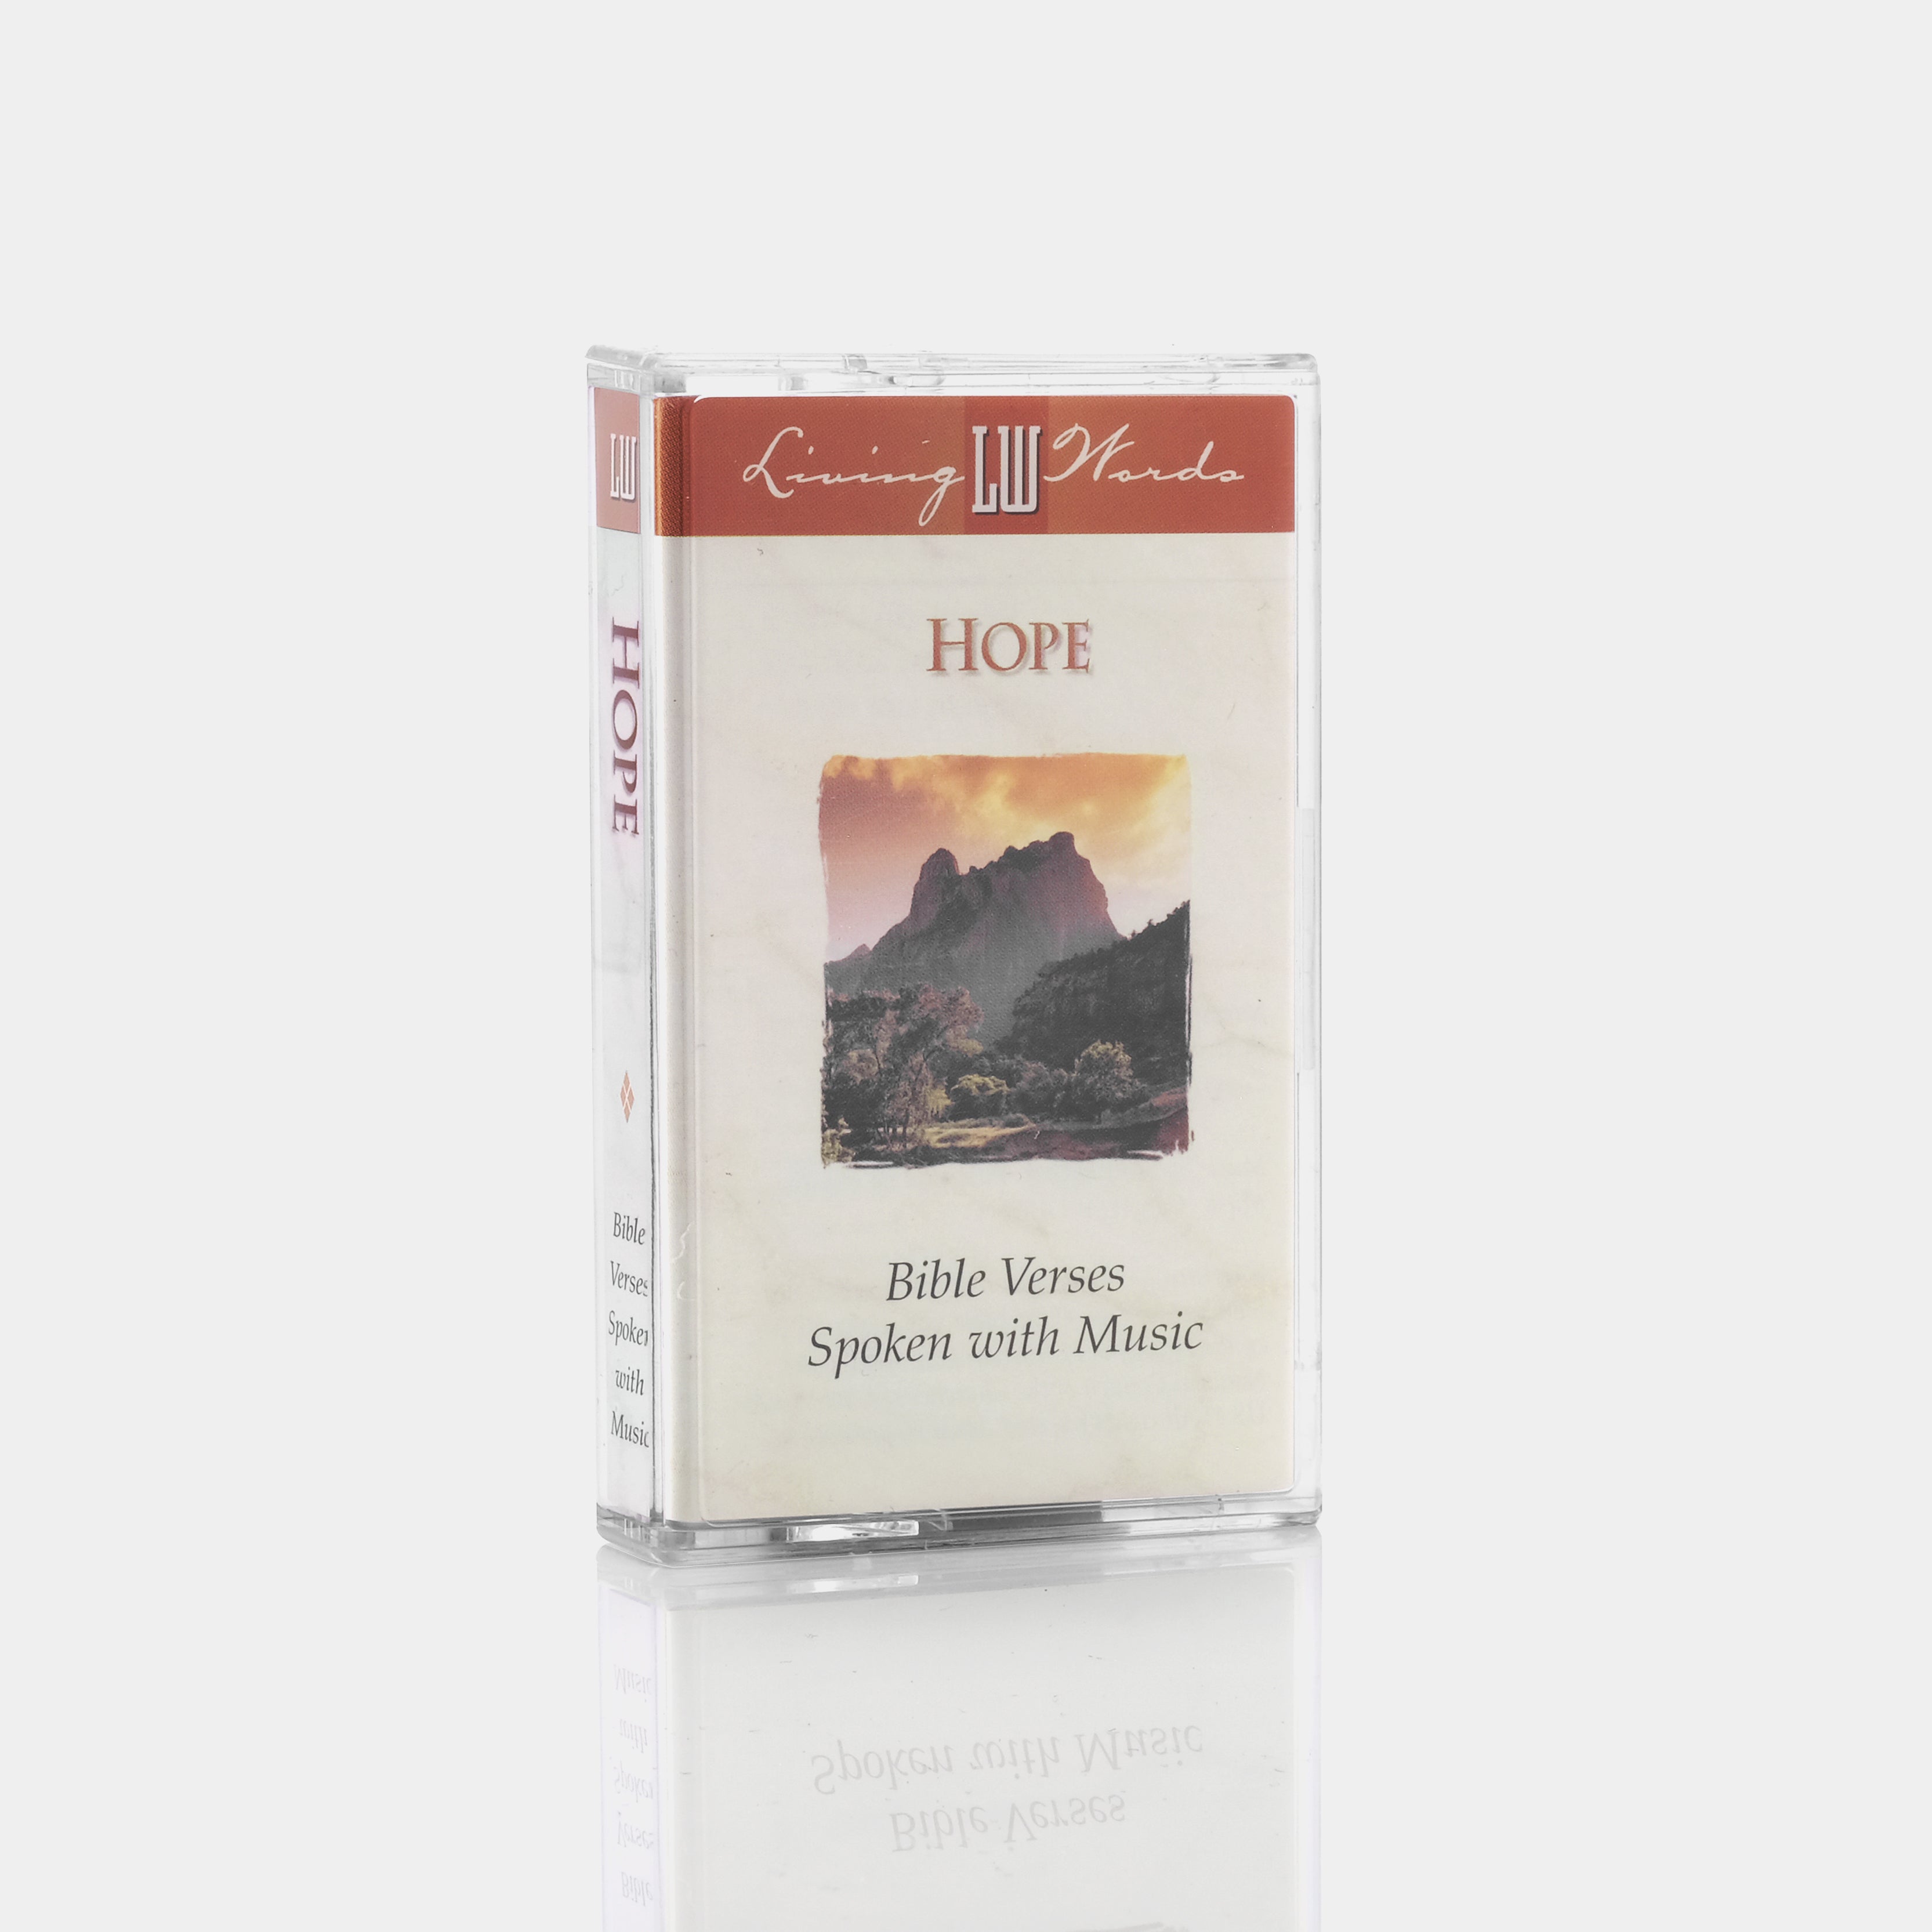 Living Words/Chris Yaw - Hope (Bible Verses Spoken With Music) Cassette Tape